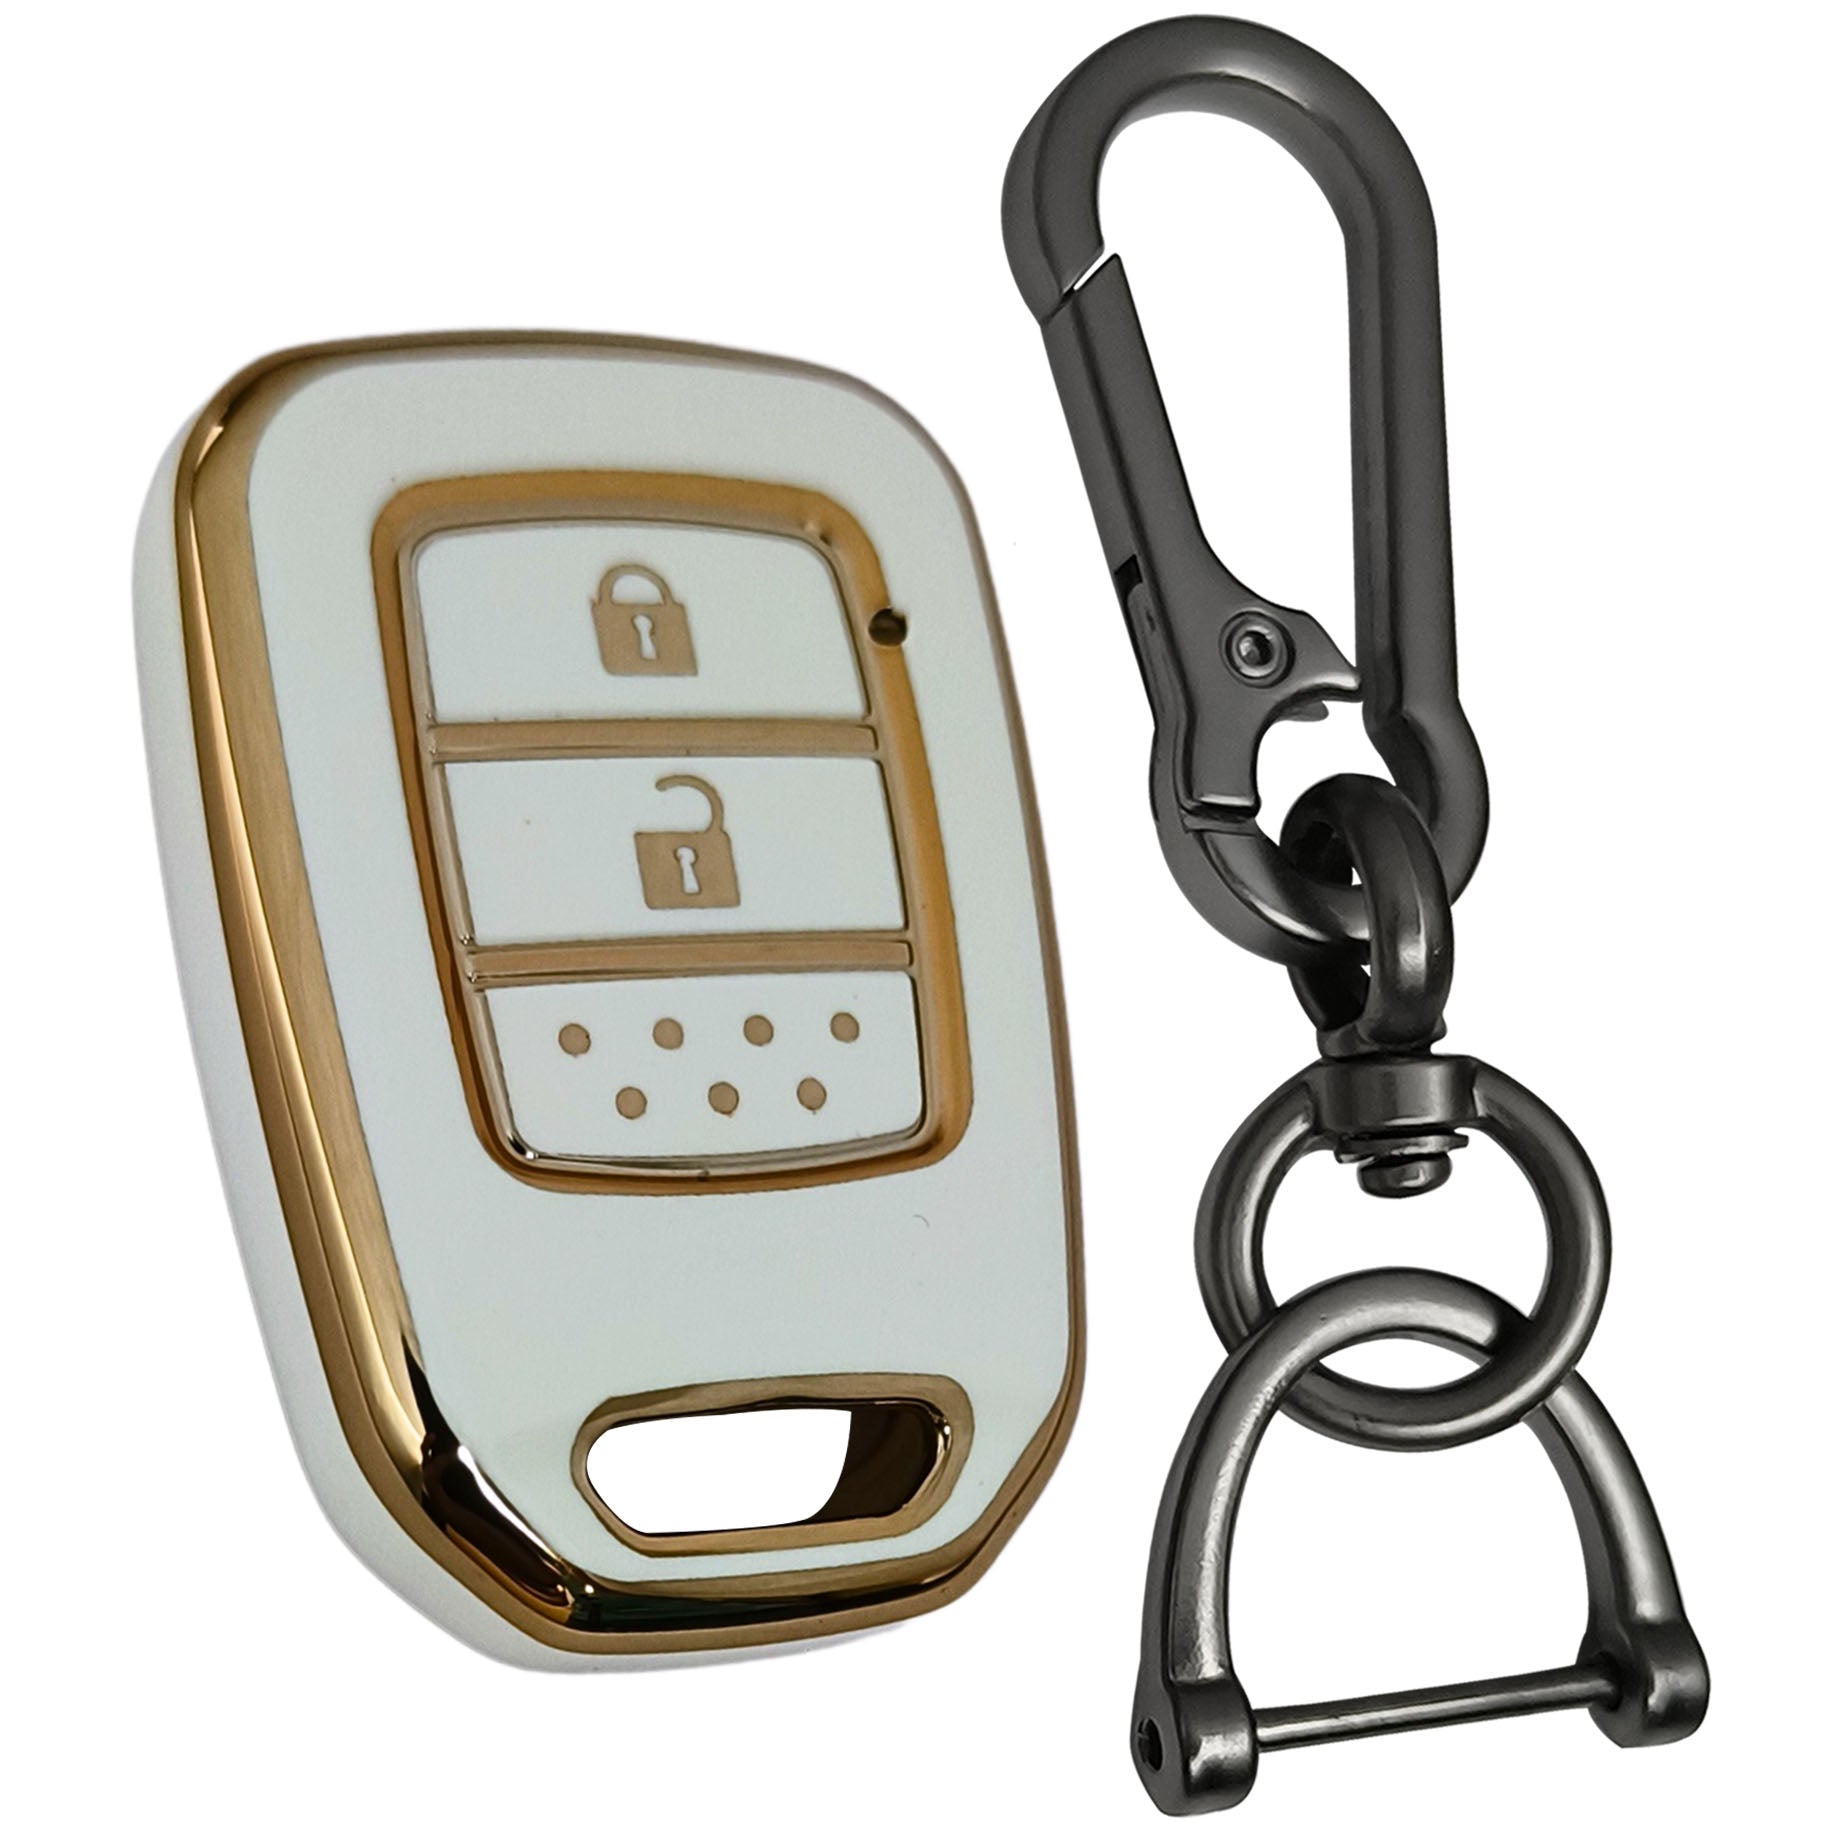 honda city jazz amaze 2 button remote tpu white gold key cover case accessories keychain